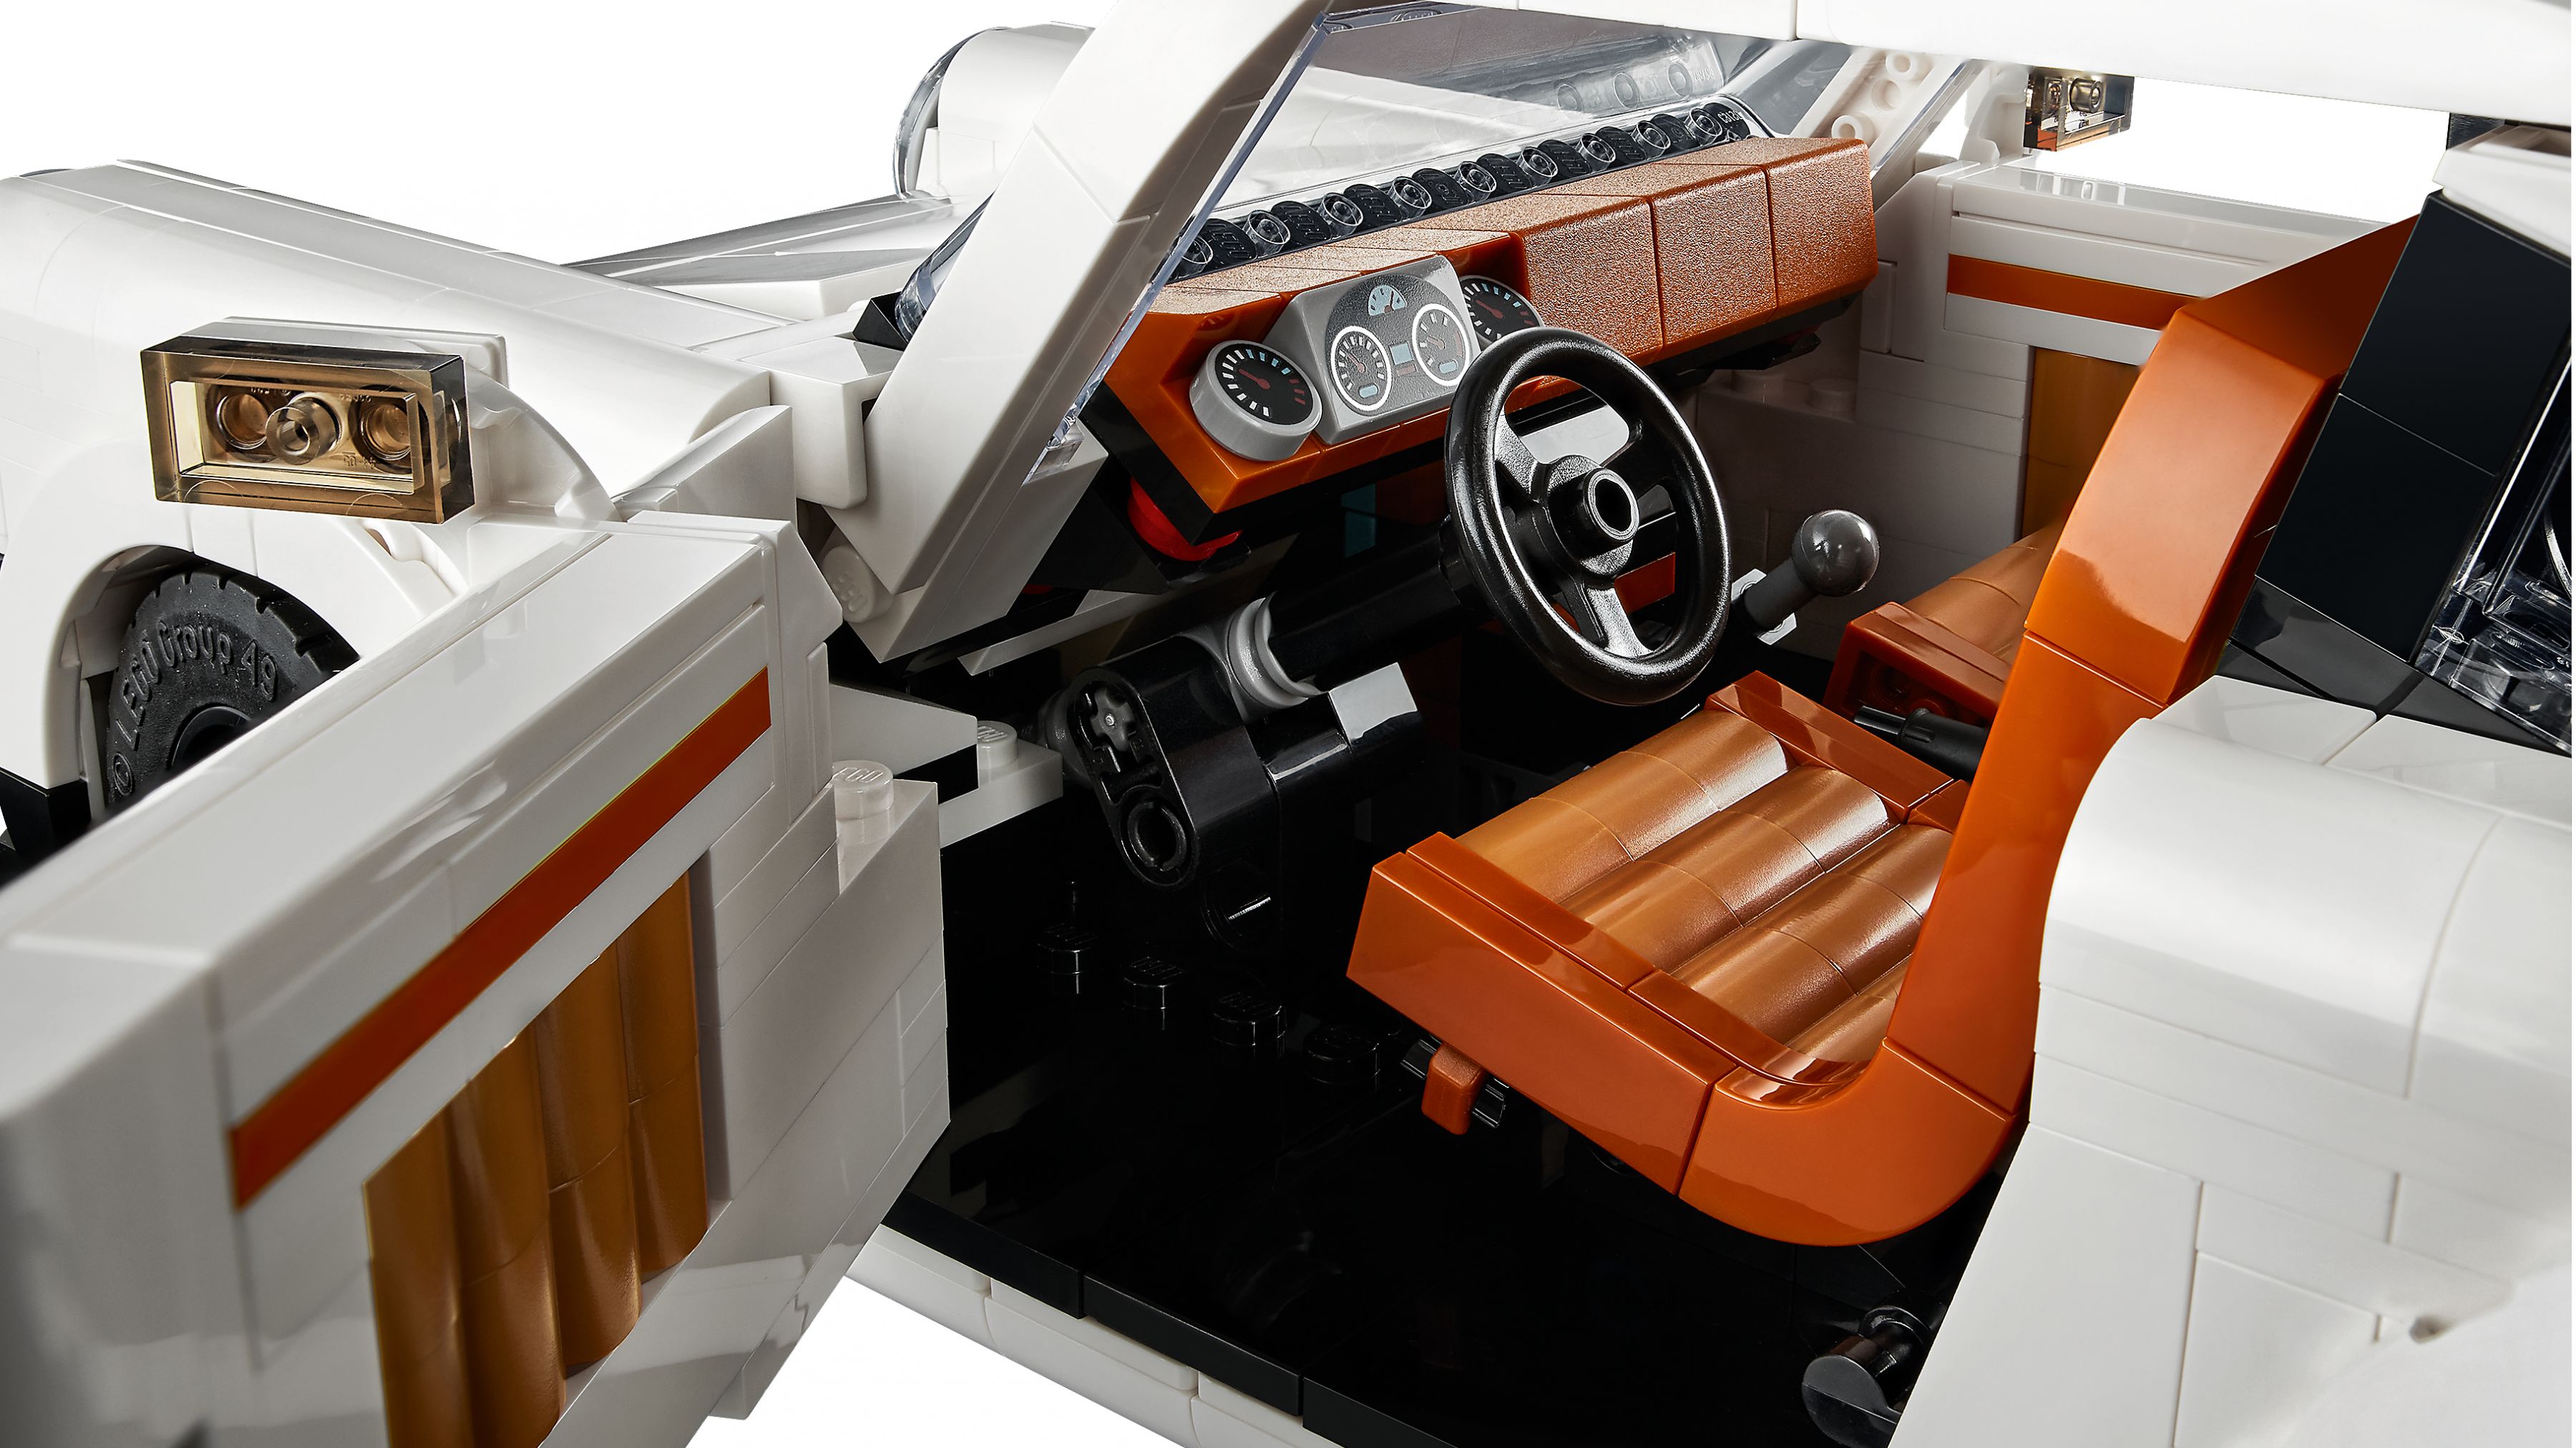 LEGO Advanced Models 10295 Porsche 911 LEGO_10295_web_sec08_nobg.jpg